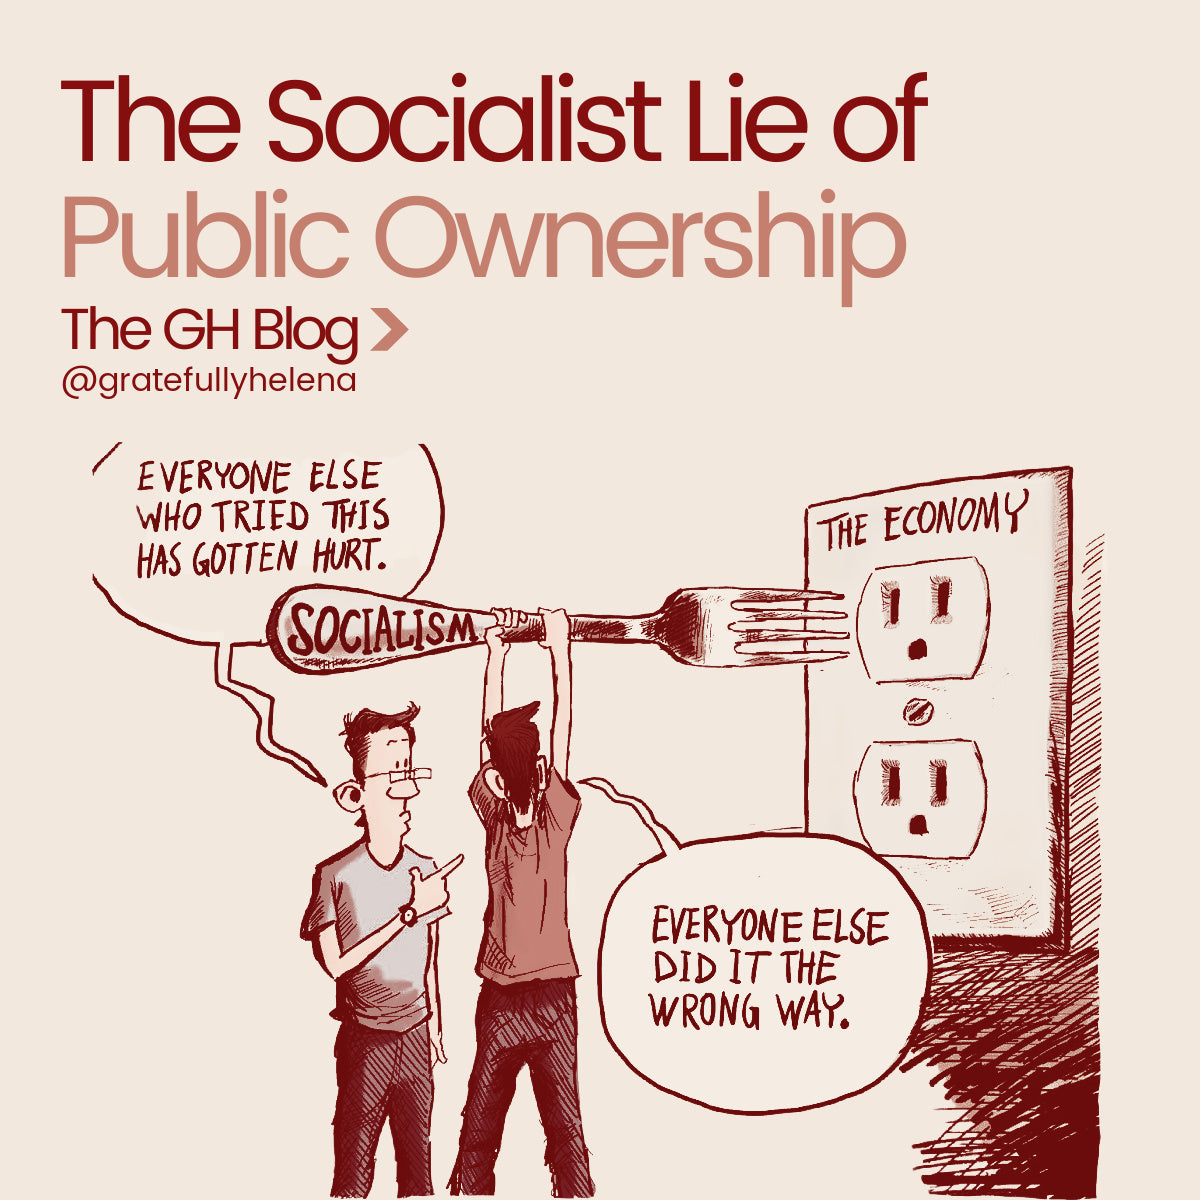 The Socialist Lie of Public Ownership